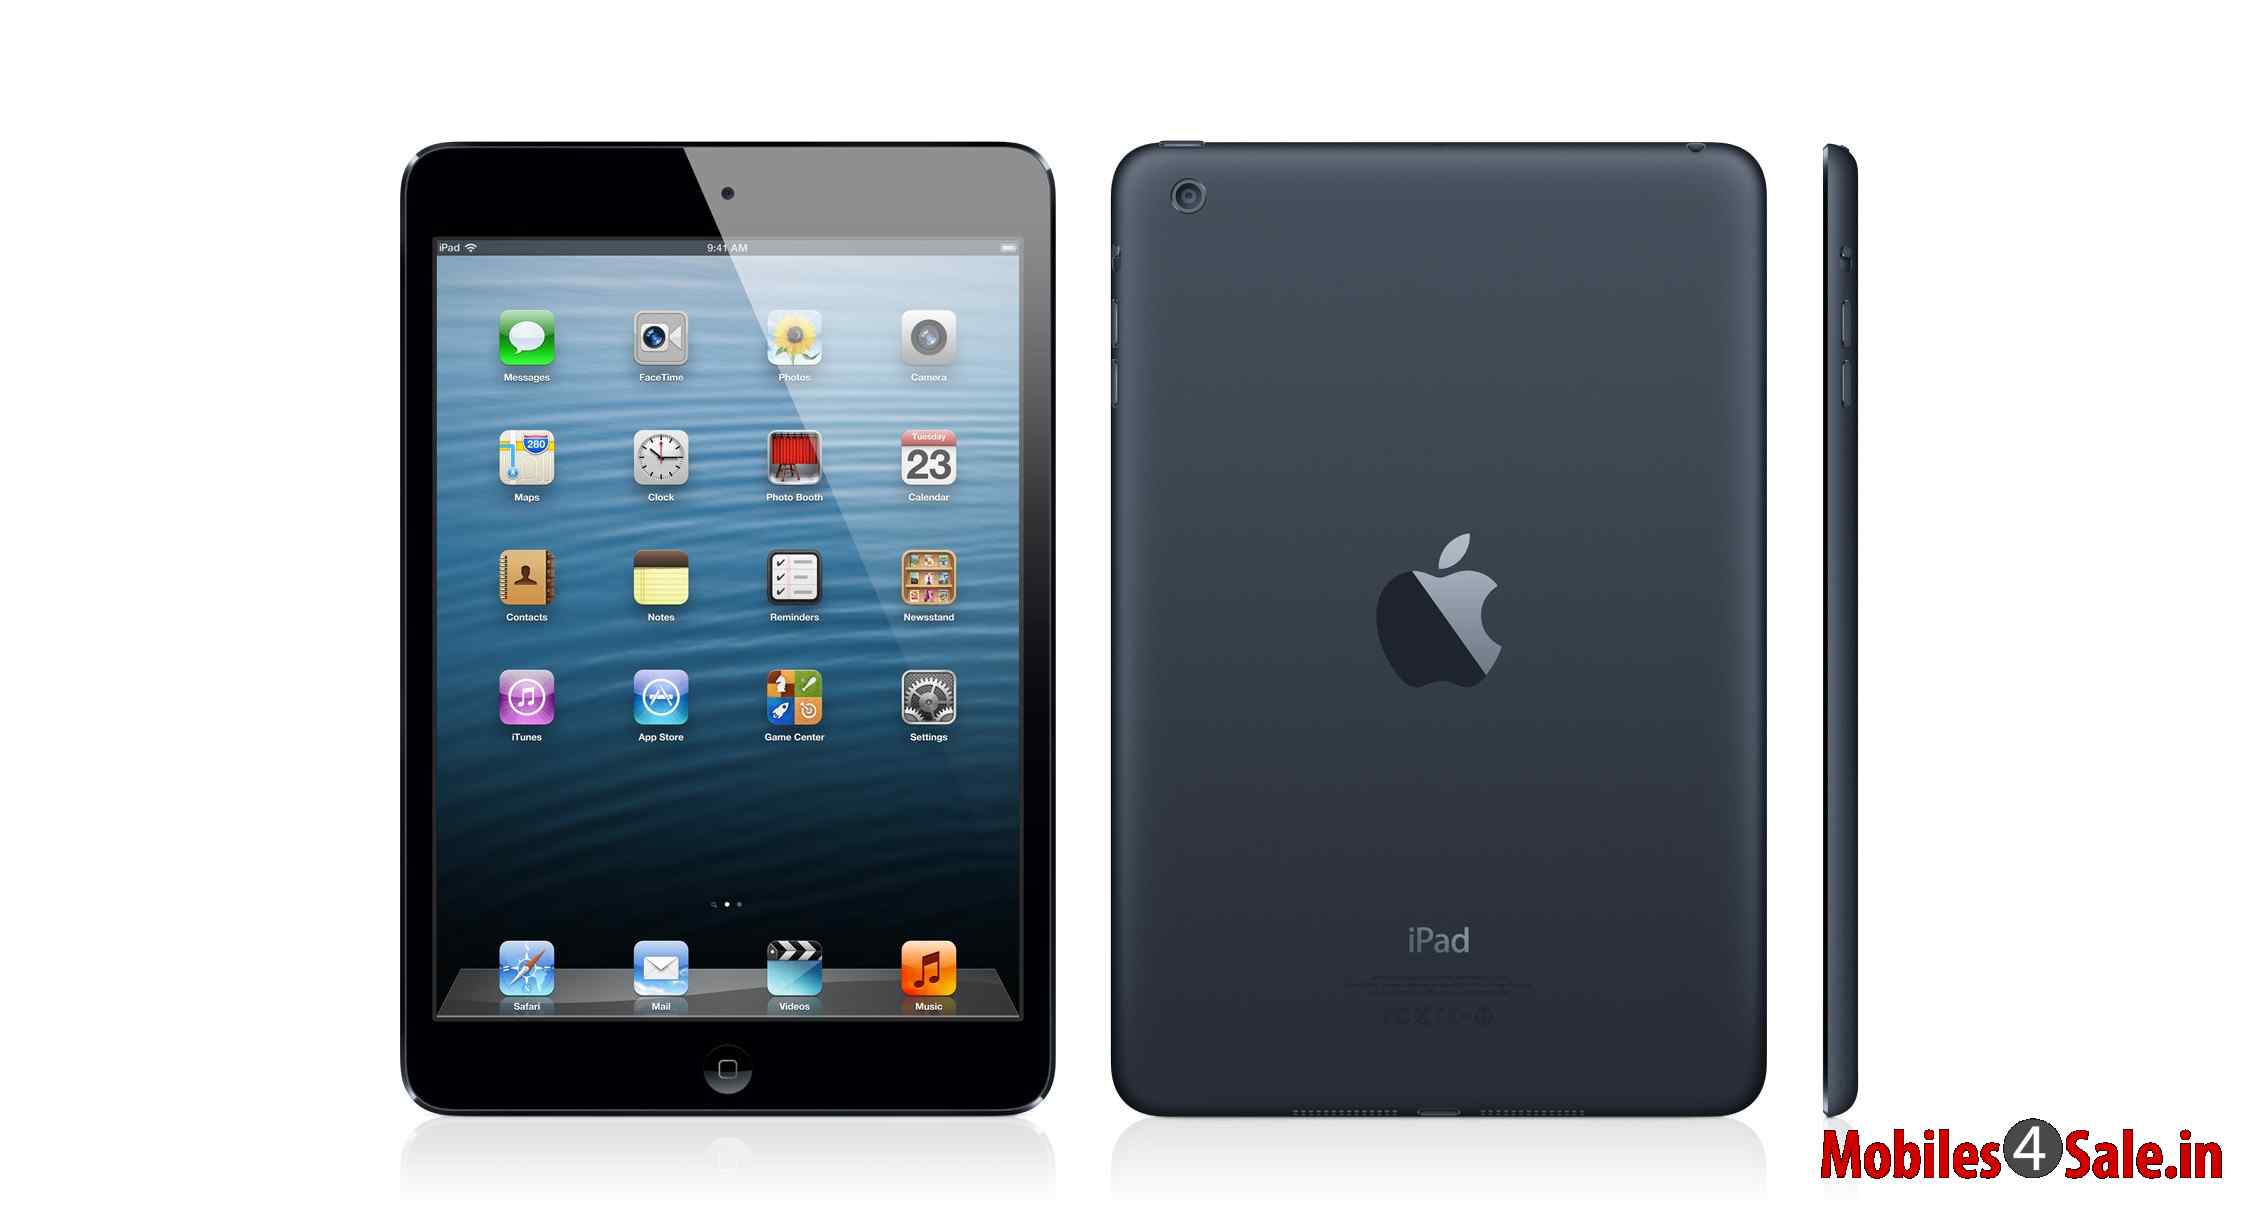 Apple iPad Mini 3 Wi-Fi Cellular